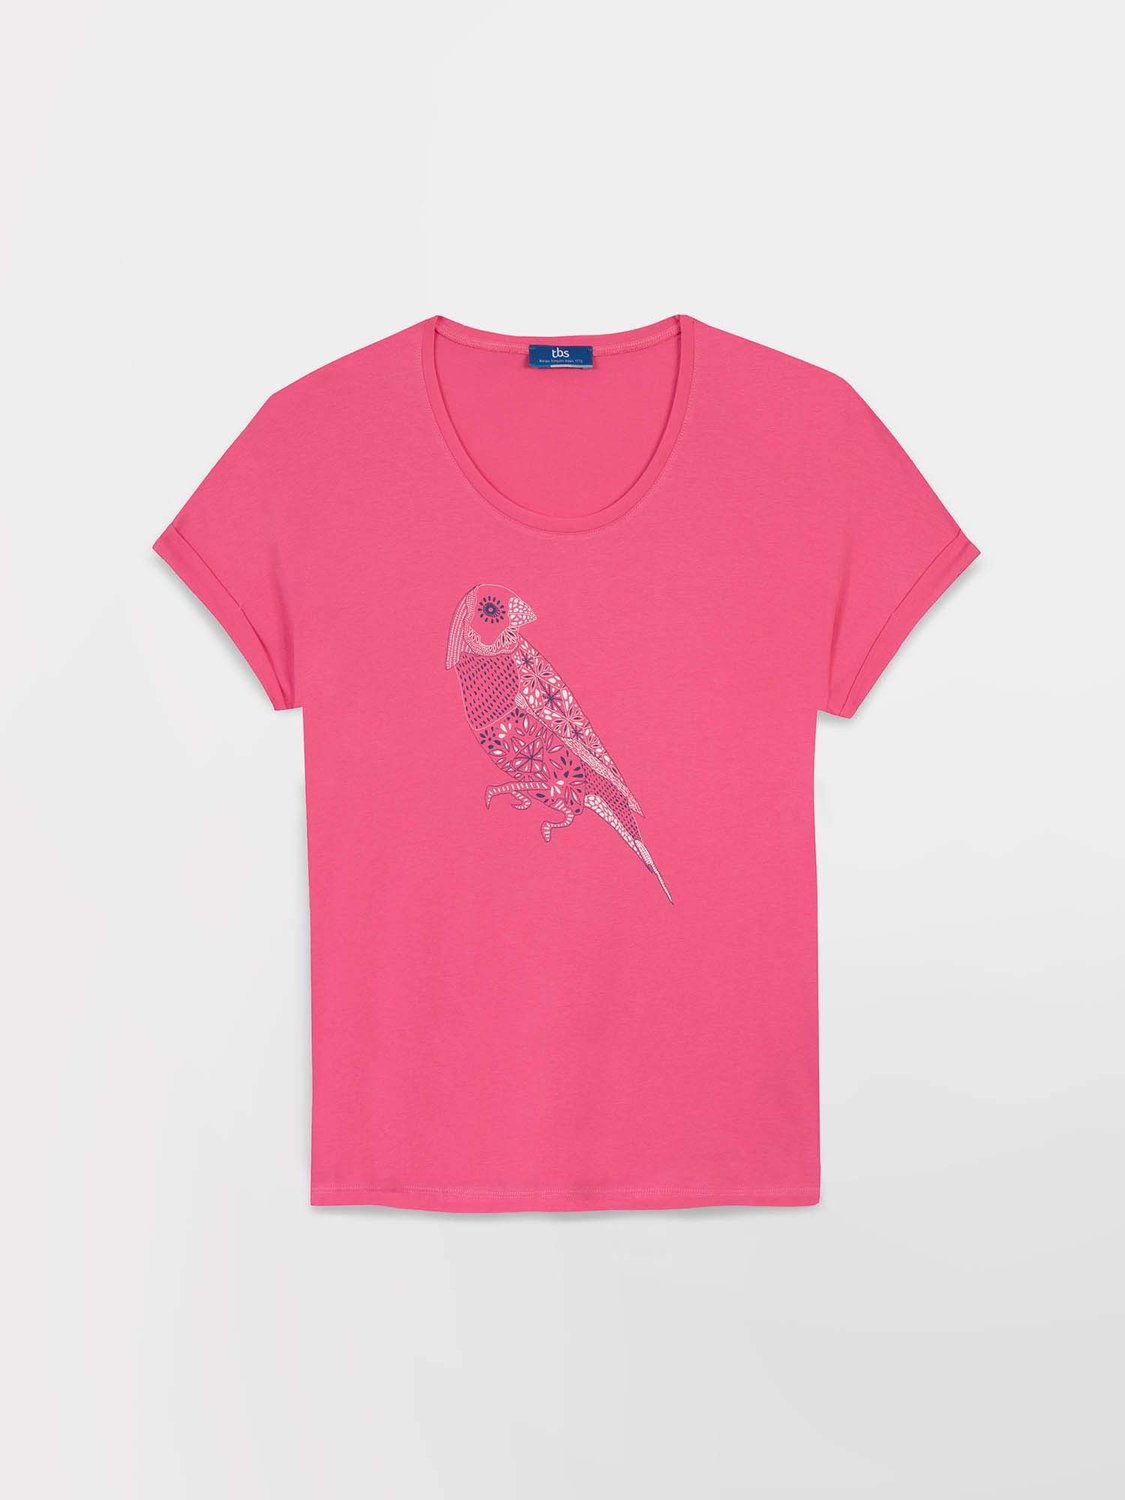 Tee Shirt Femme Coton Biologique Motif Perroquet Fuschia